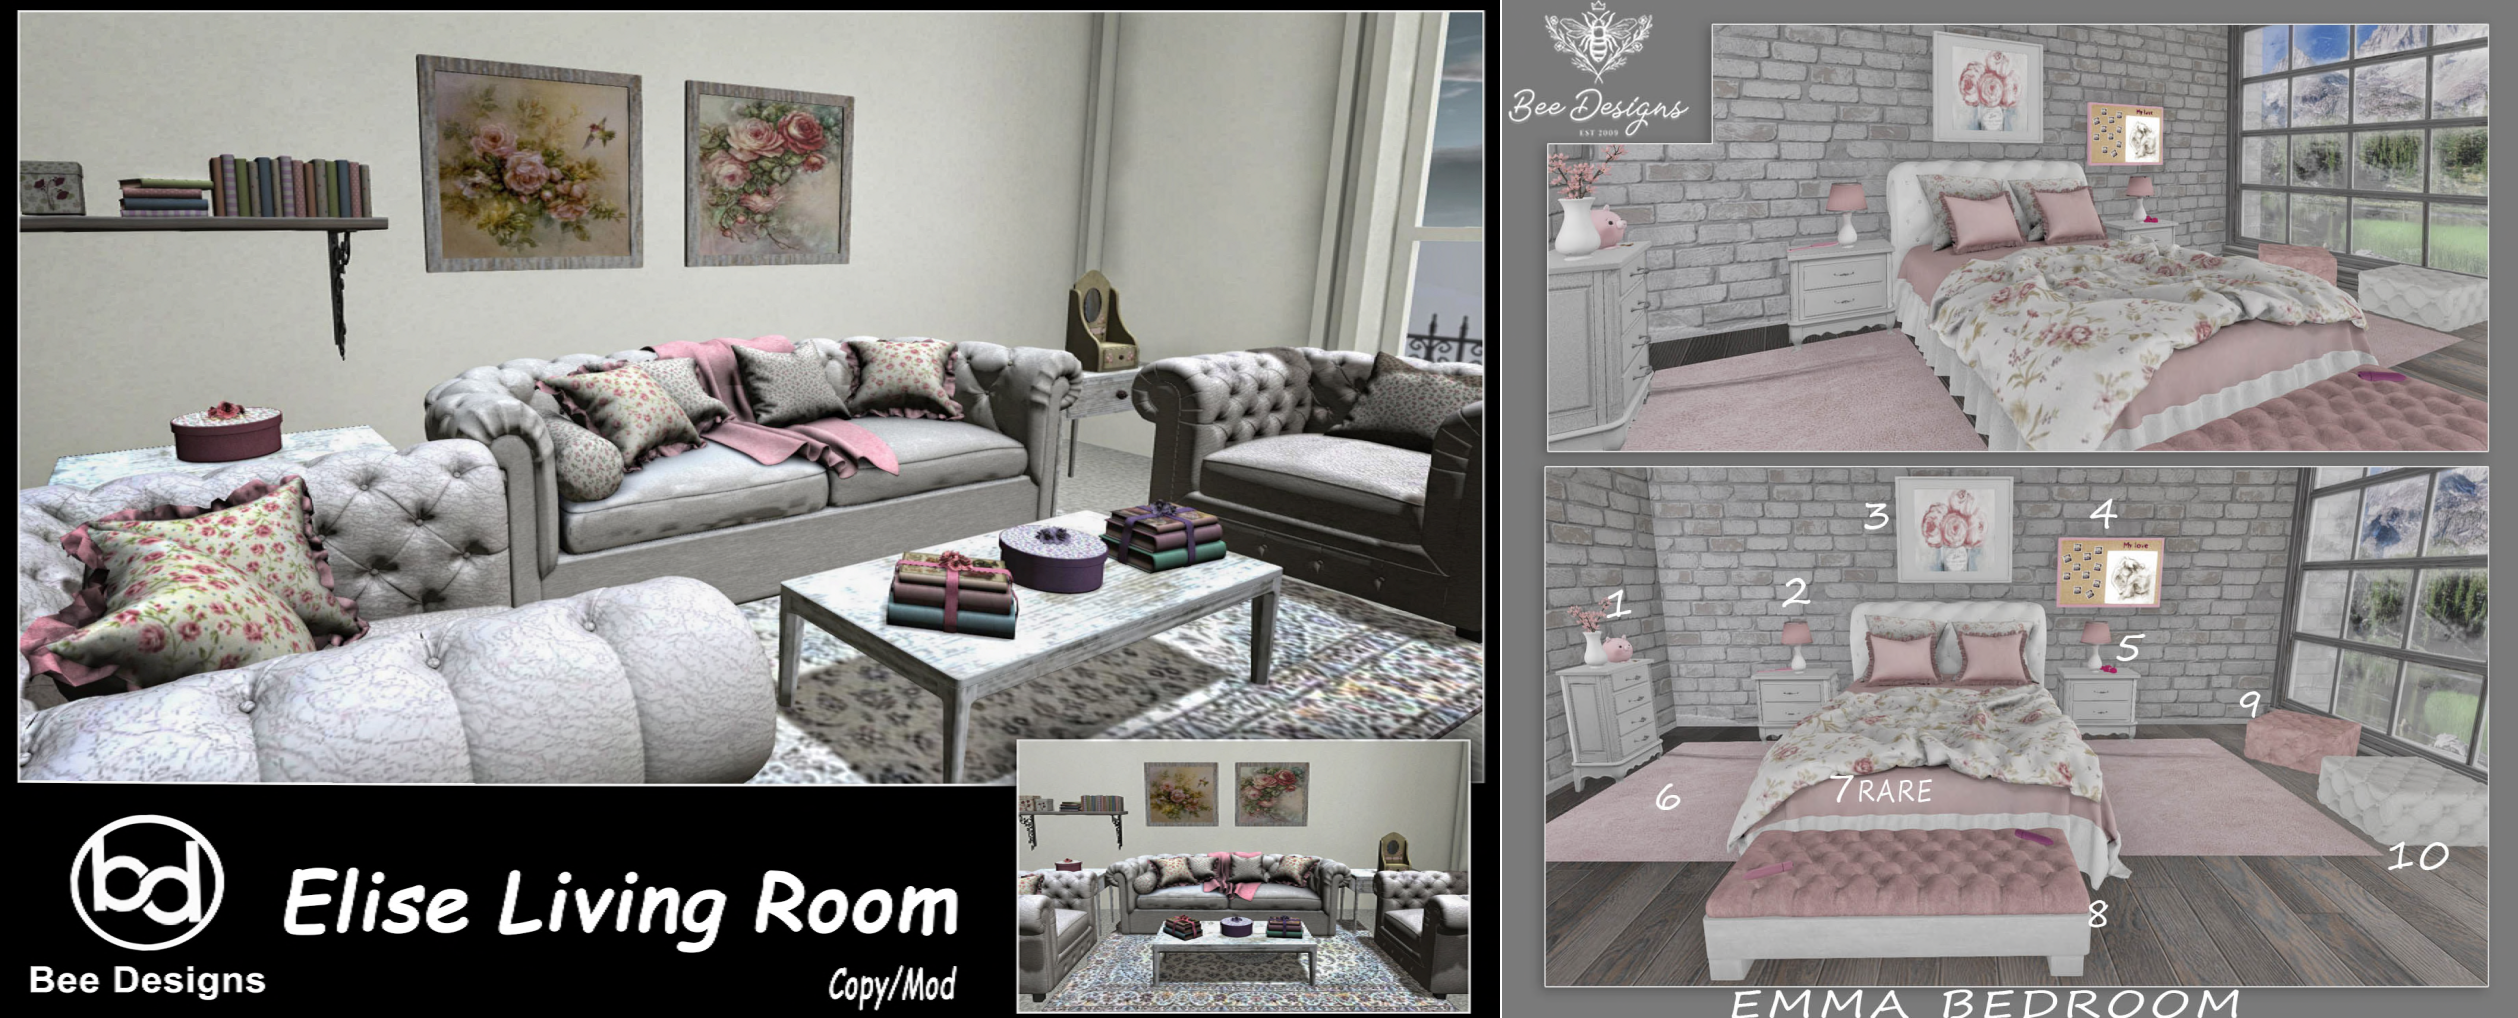 Bee Designs – Elise Living Room Set & Emma Bedroom